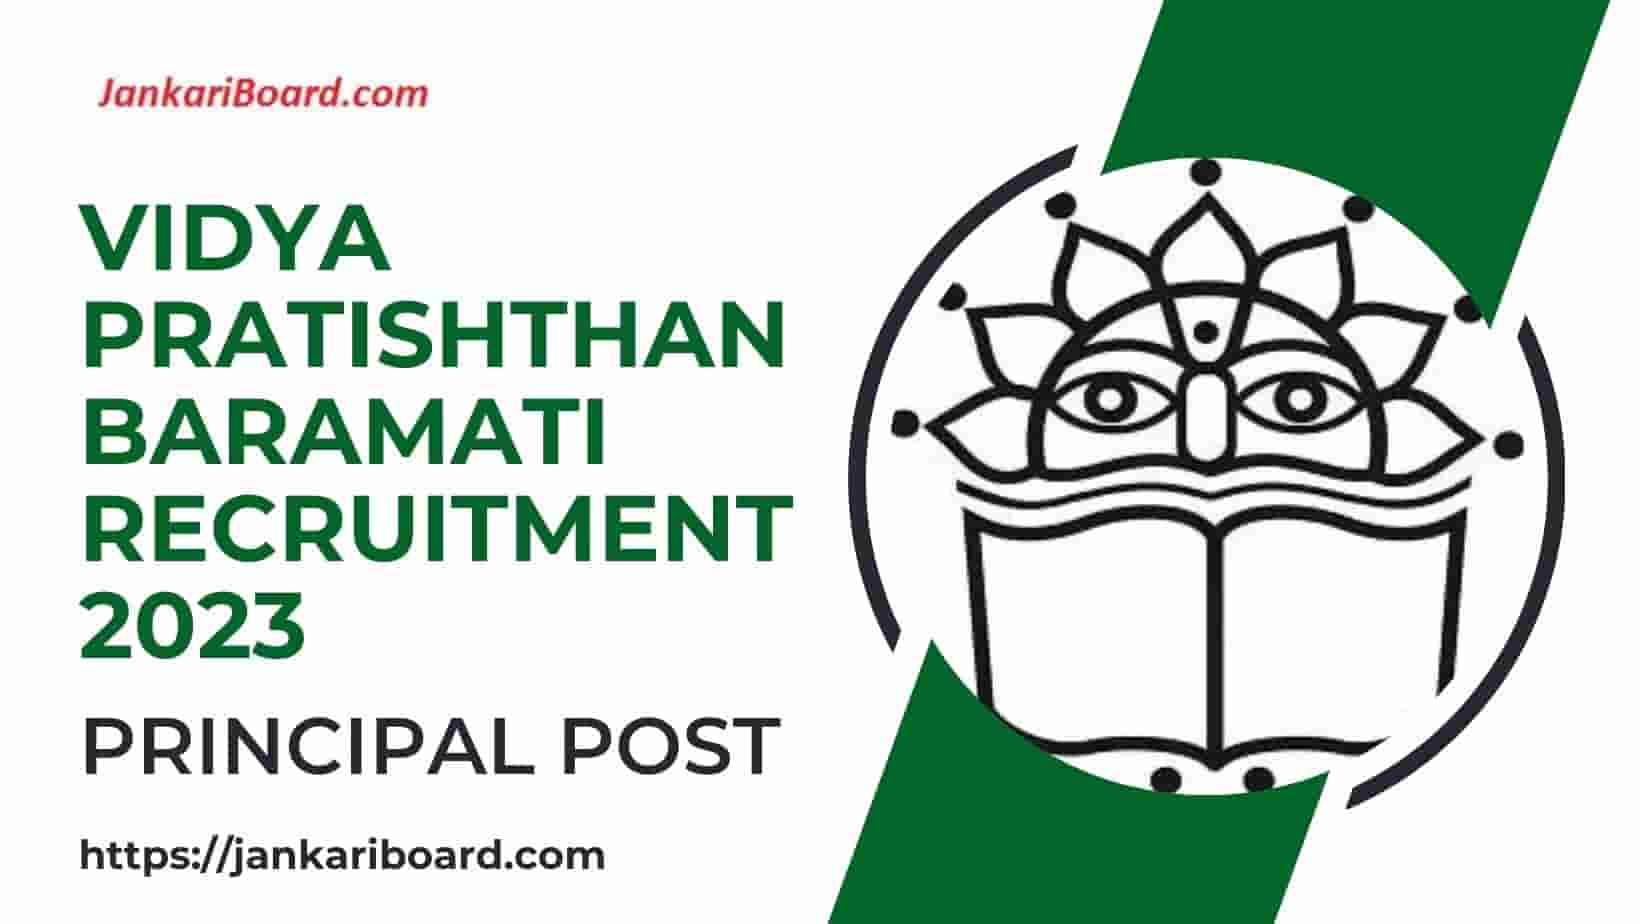 Vidya Pratishthan Baramati Recruitment 2023